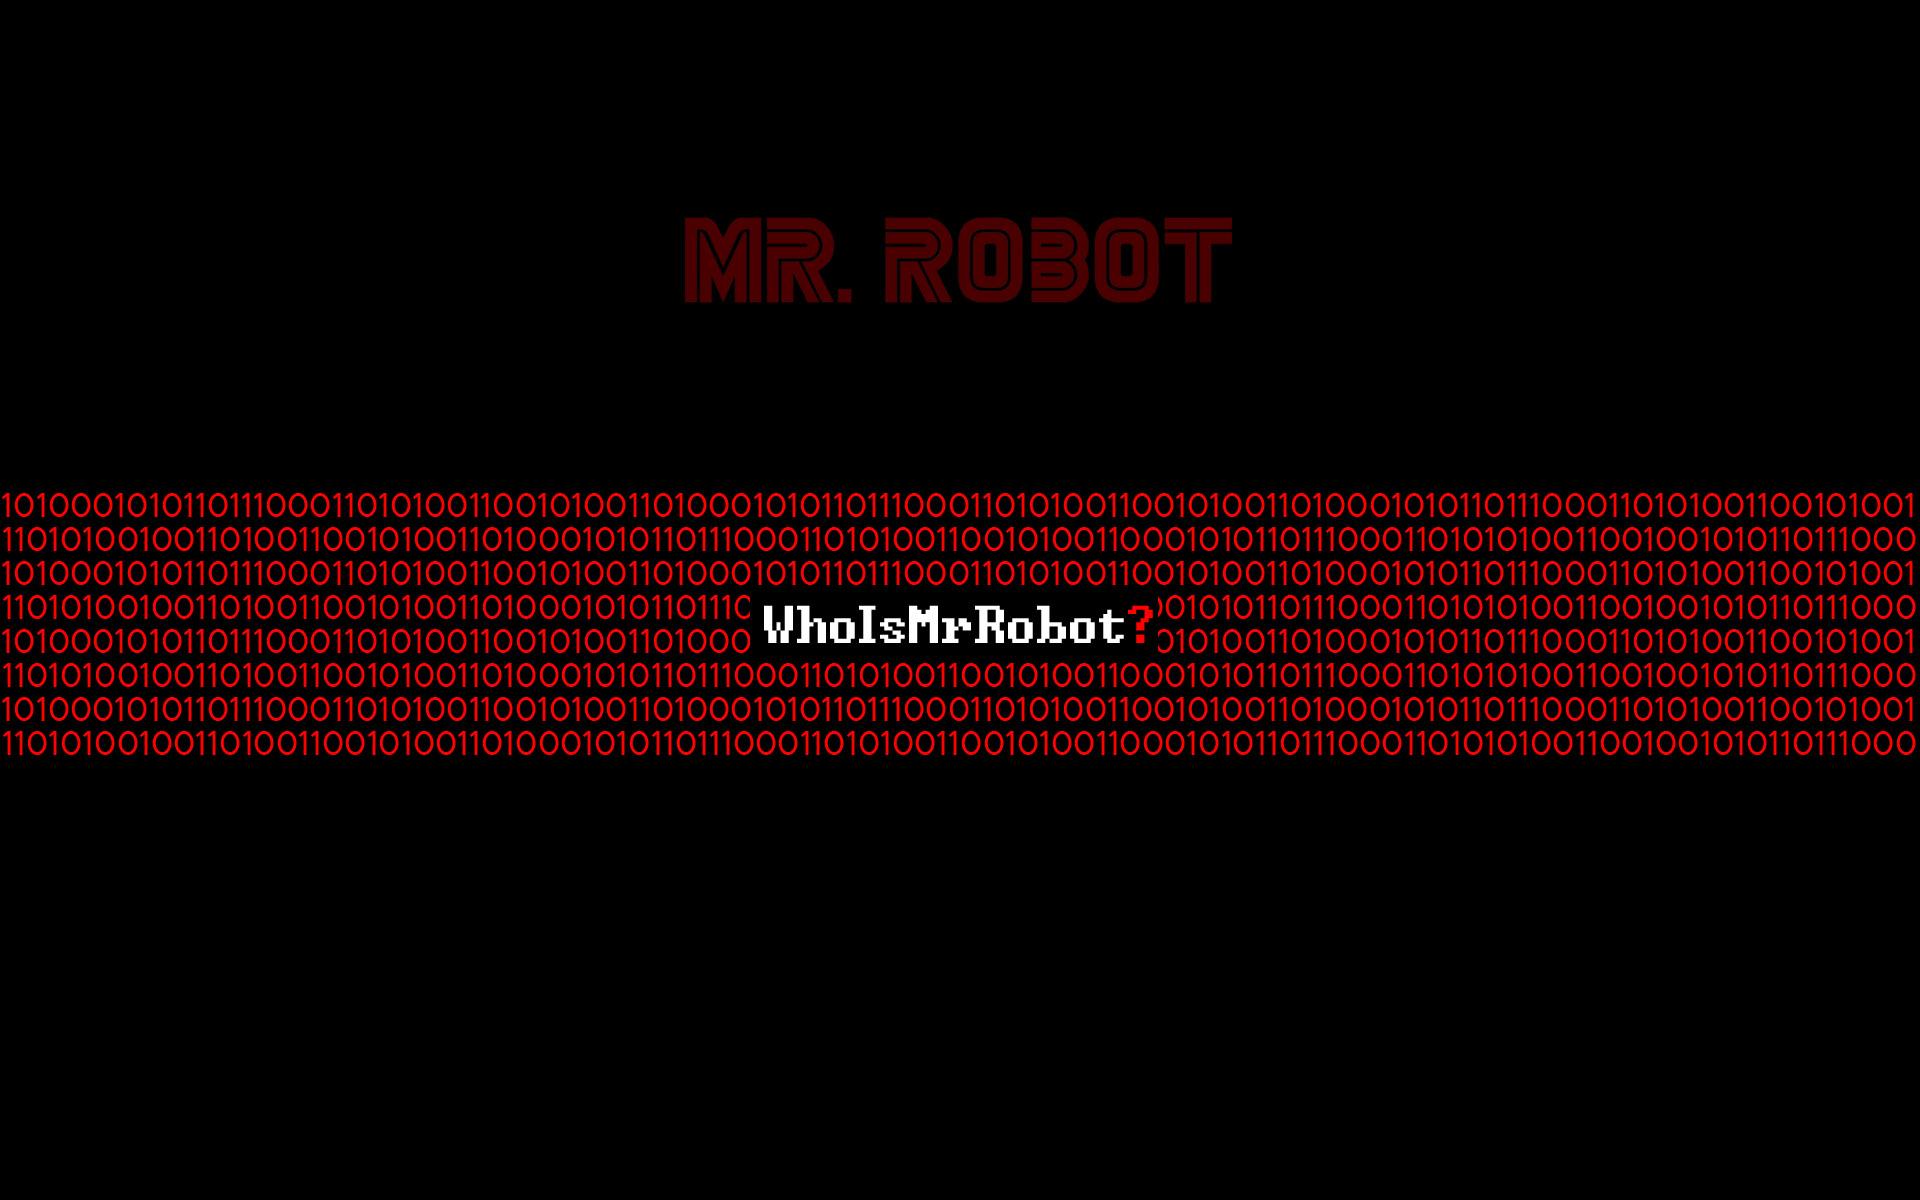 Alex Abian on X: Love this Mr.Robot wallpaper